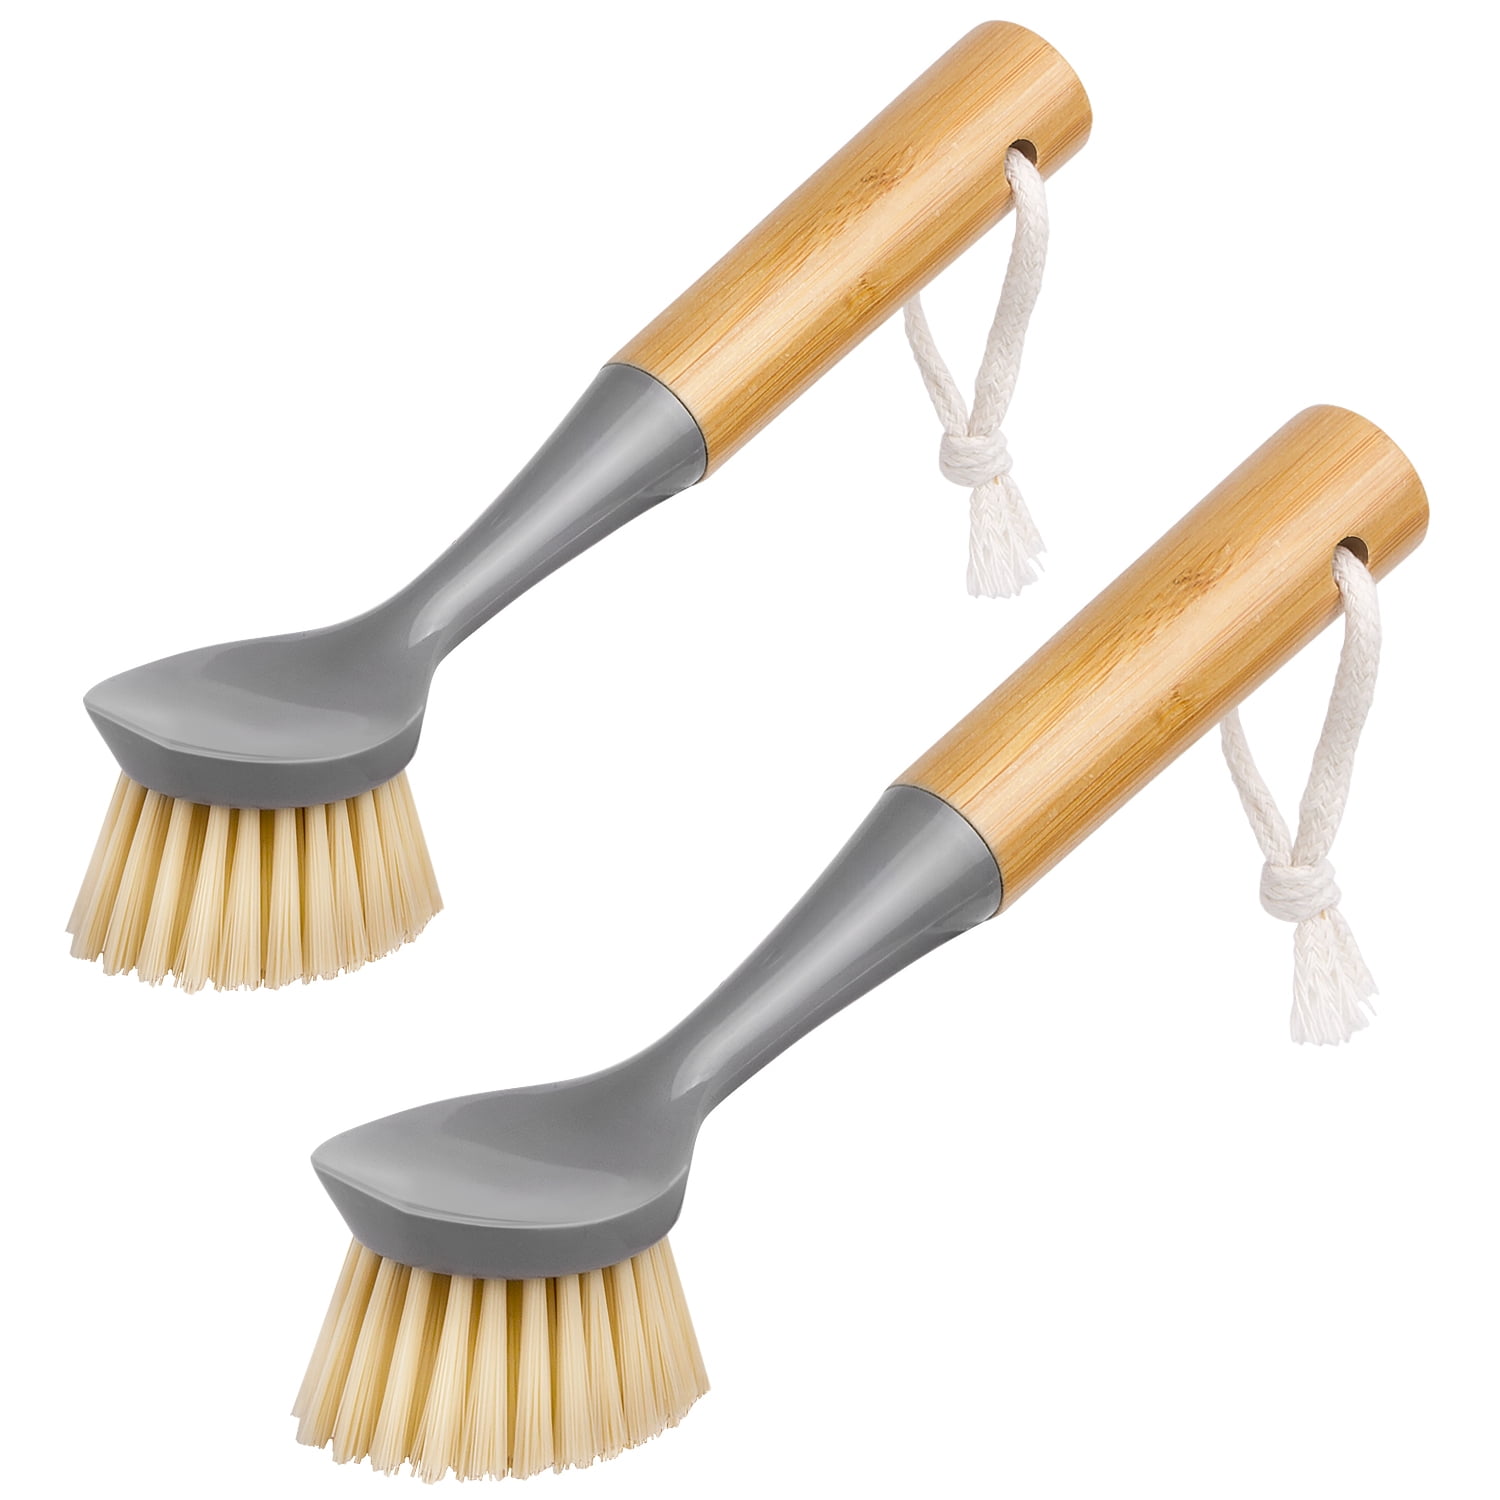 Bamboo Brushes 3PCS Washing Up Brush Household Cleaning Brush Set,1 Scrub Pan 